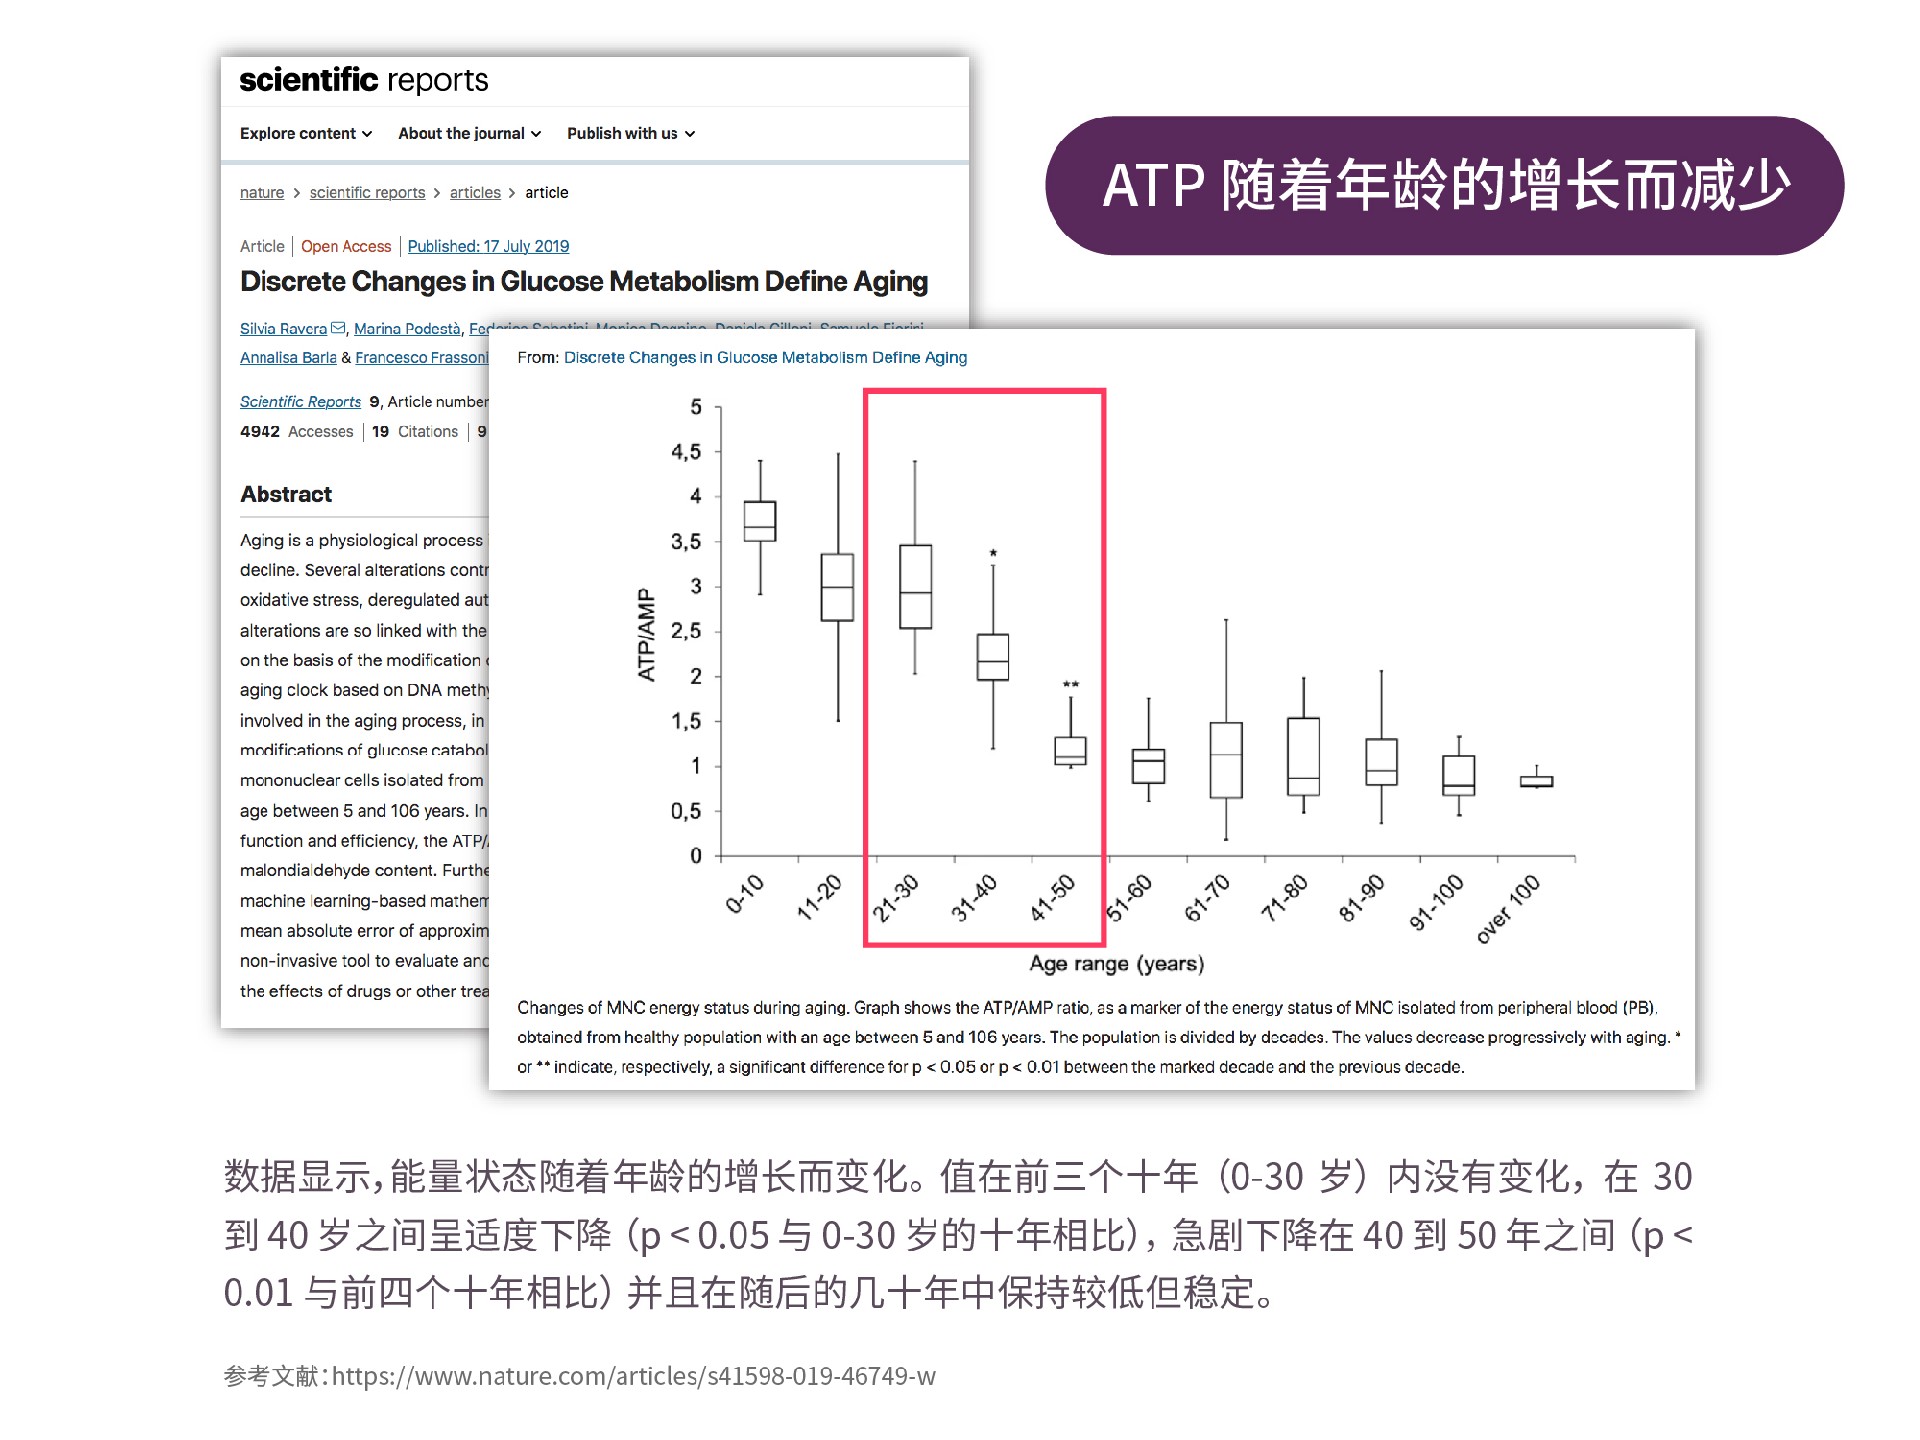 ATP與抗老知乎配圖_工作區域 1 複本 2.jpg